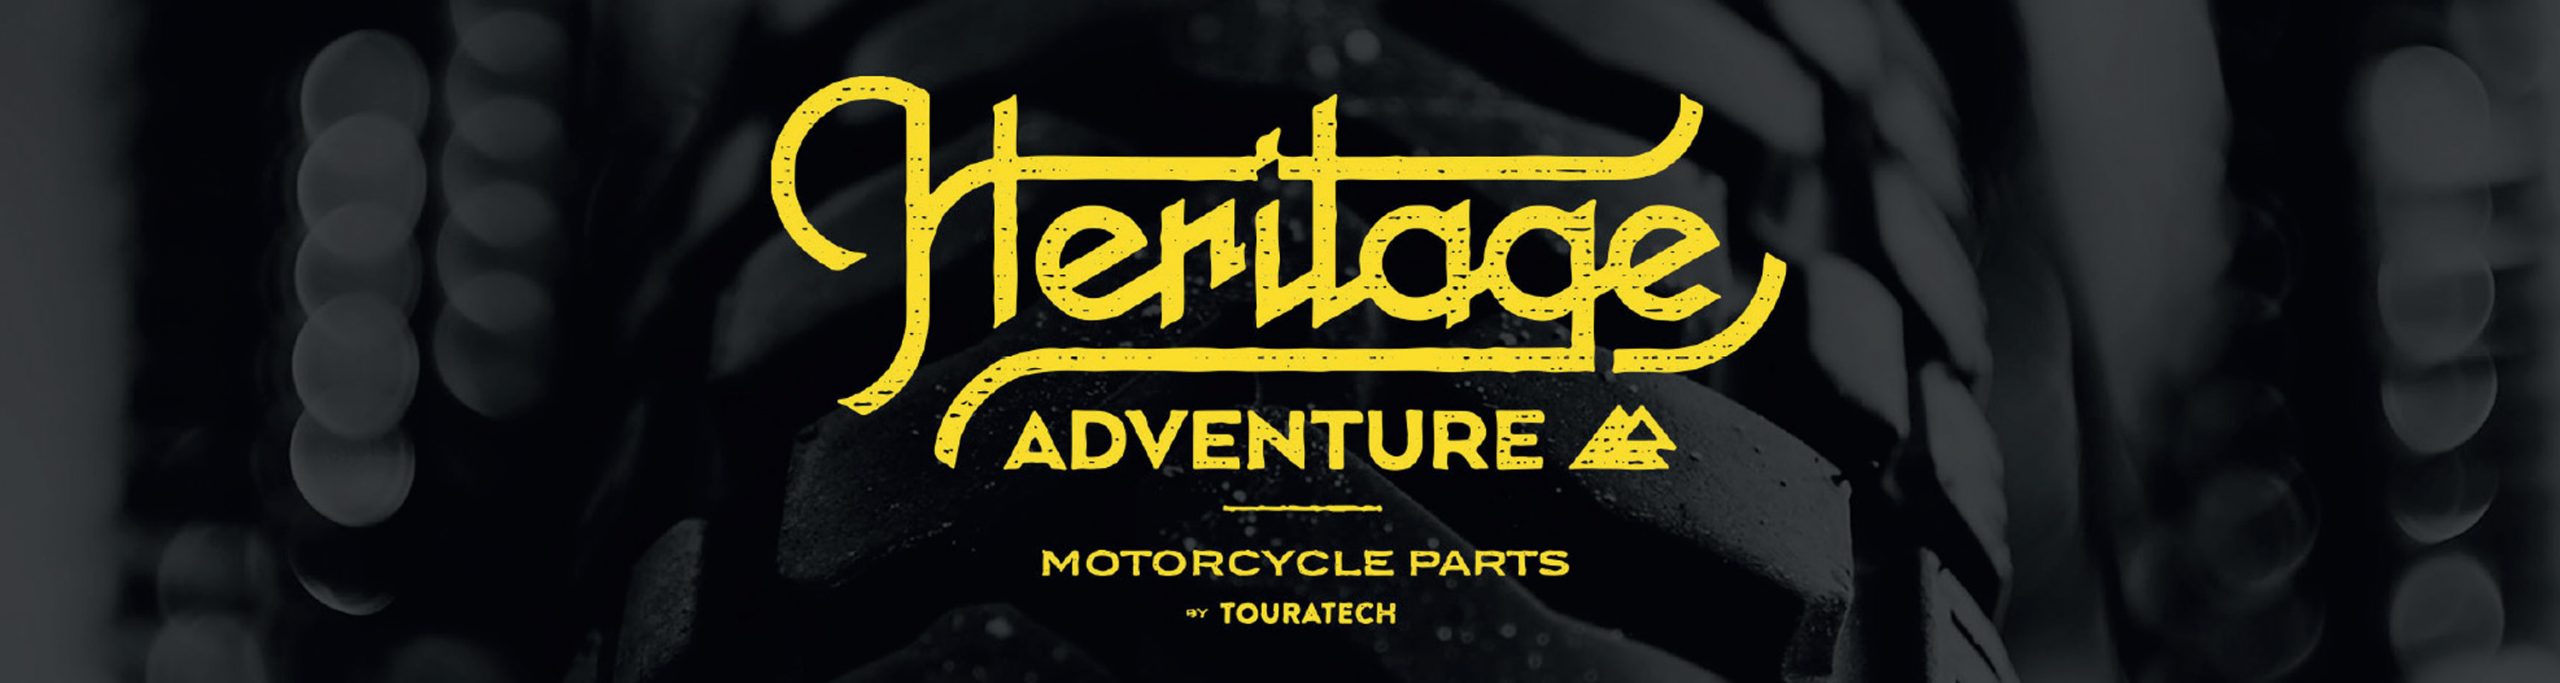 Heritage_Adventure_Touratech_by_majormajor_Start